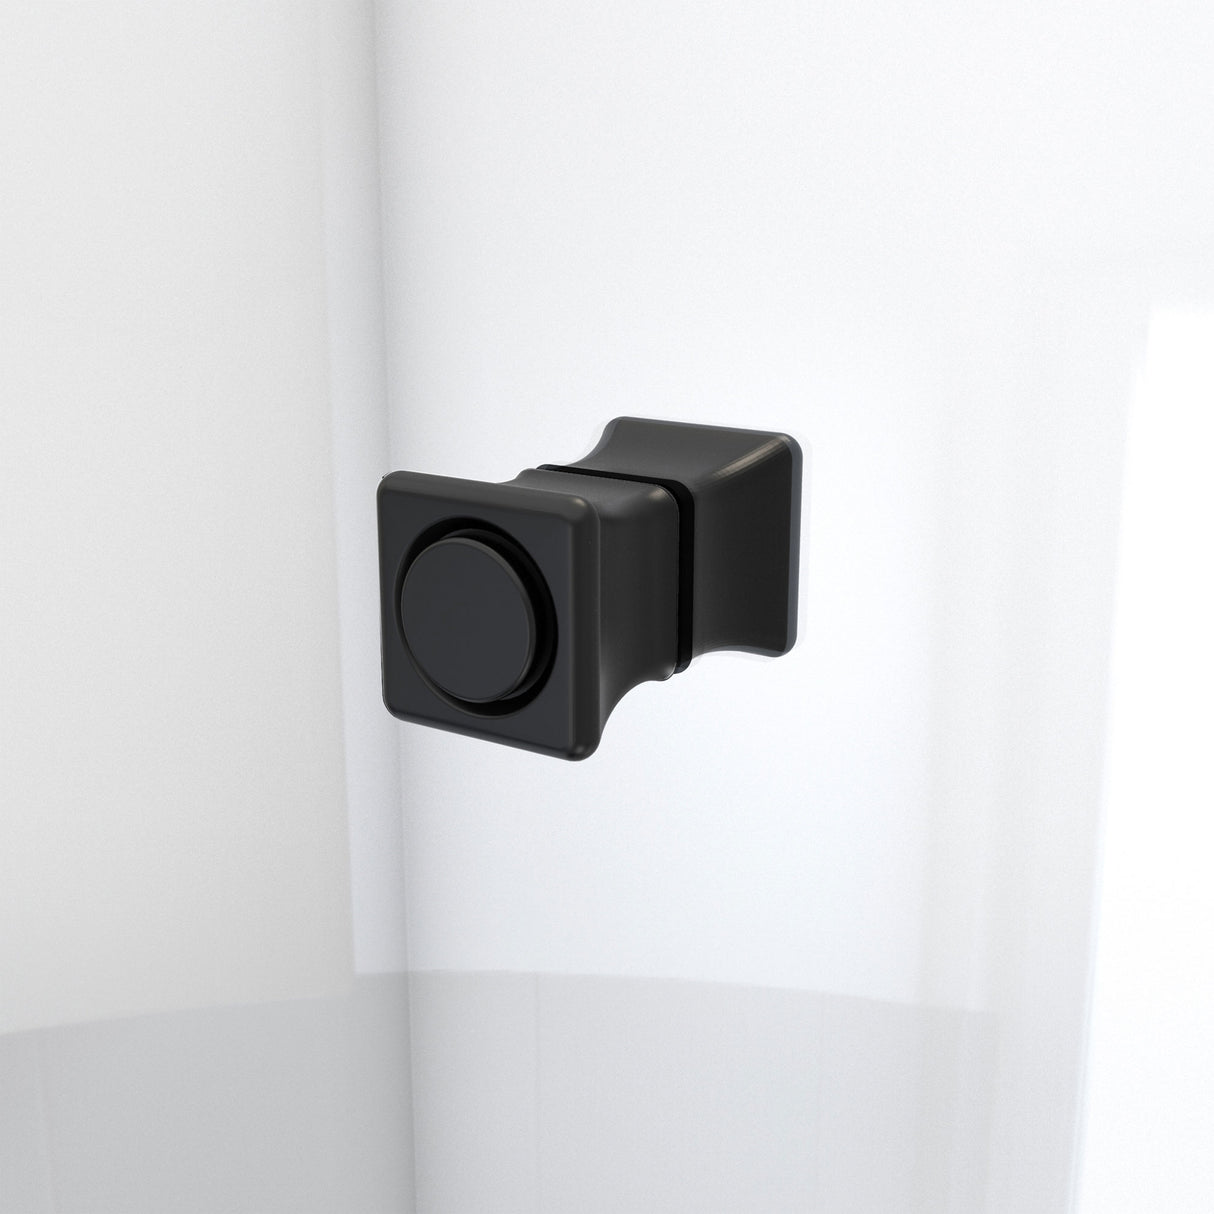 DreamLine Aqua-Q Fold 36 in. D x 36 in. W x 76 3/4 in. H Frameless Bi-Fold Shower Door in Satin Black with Biscuit Acrylic Kit